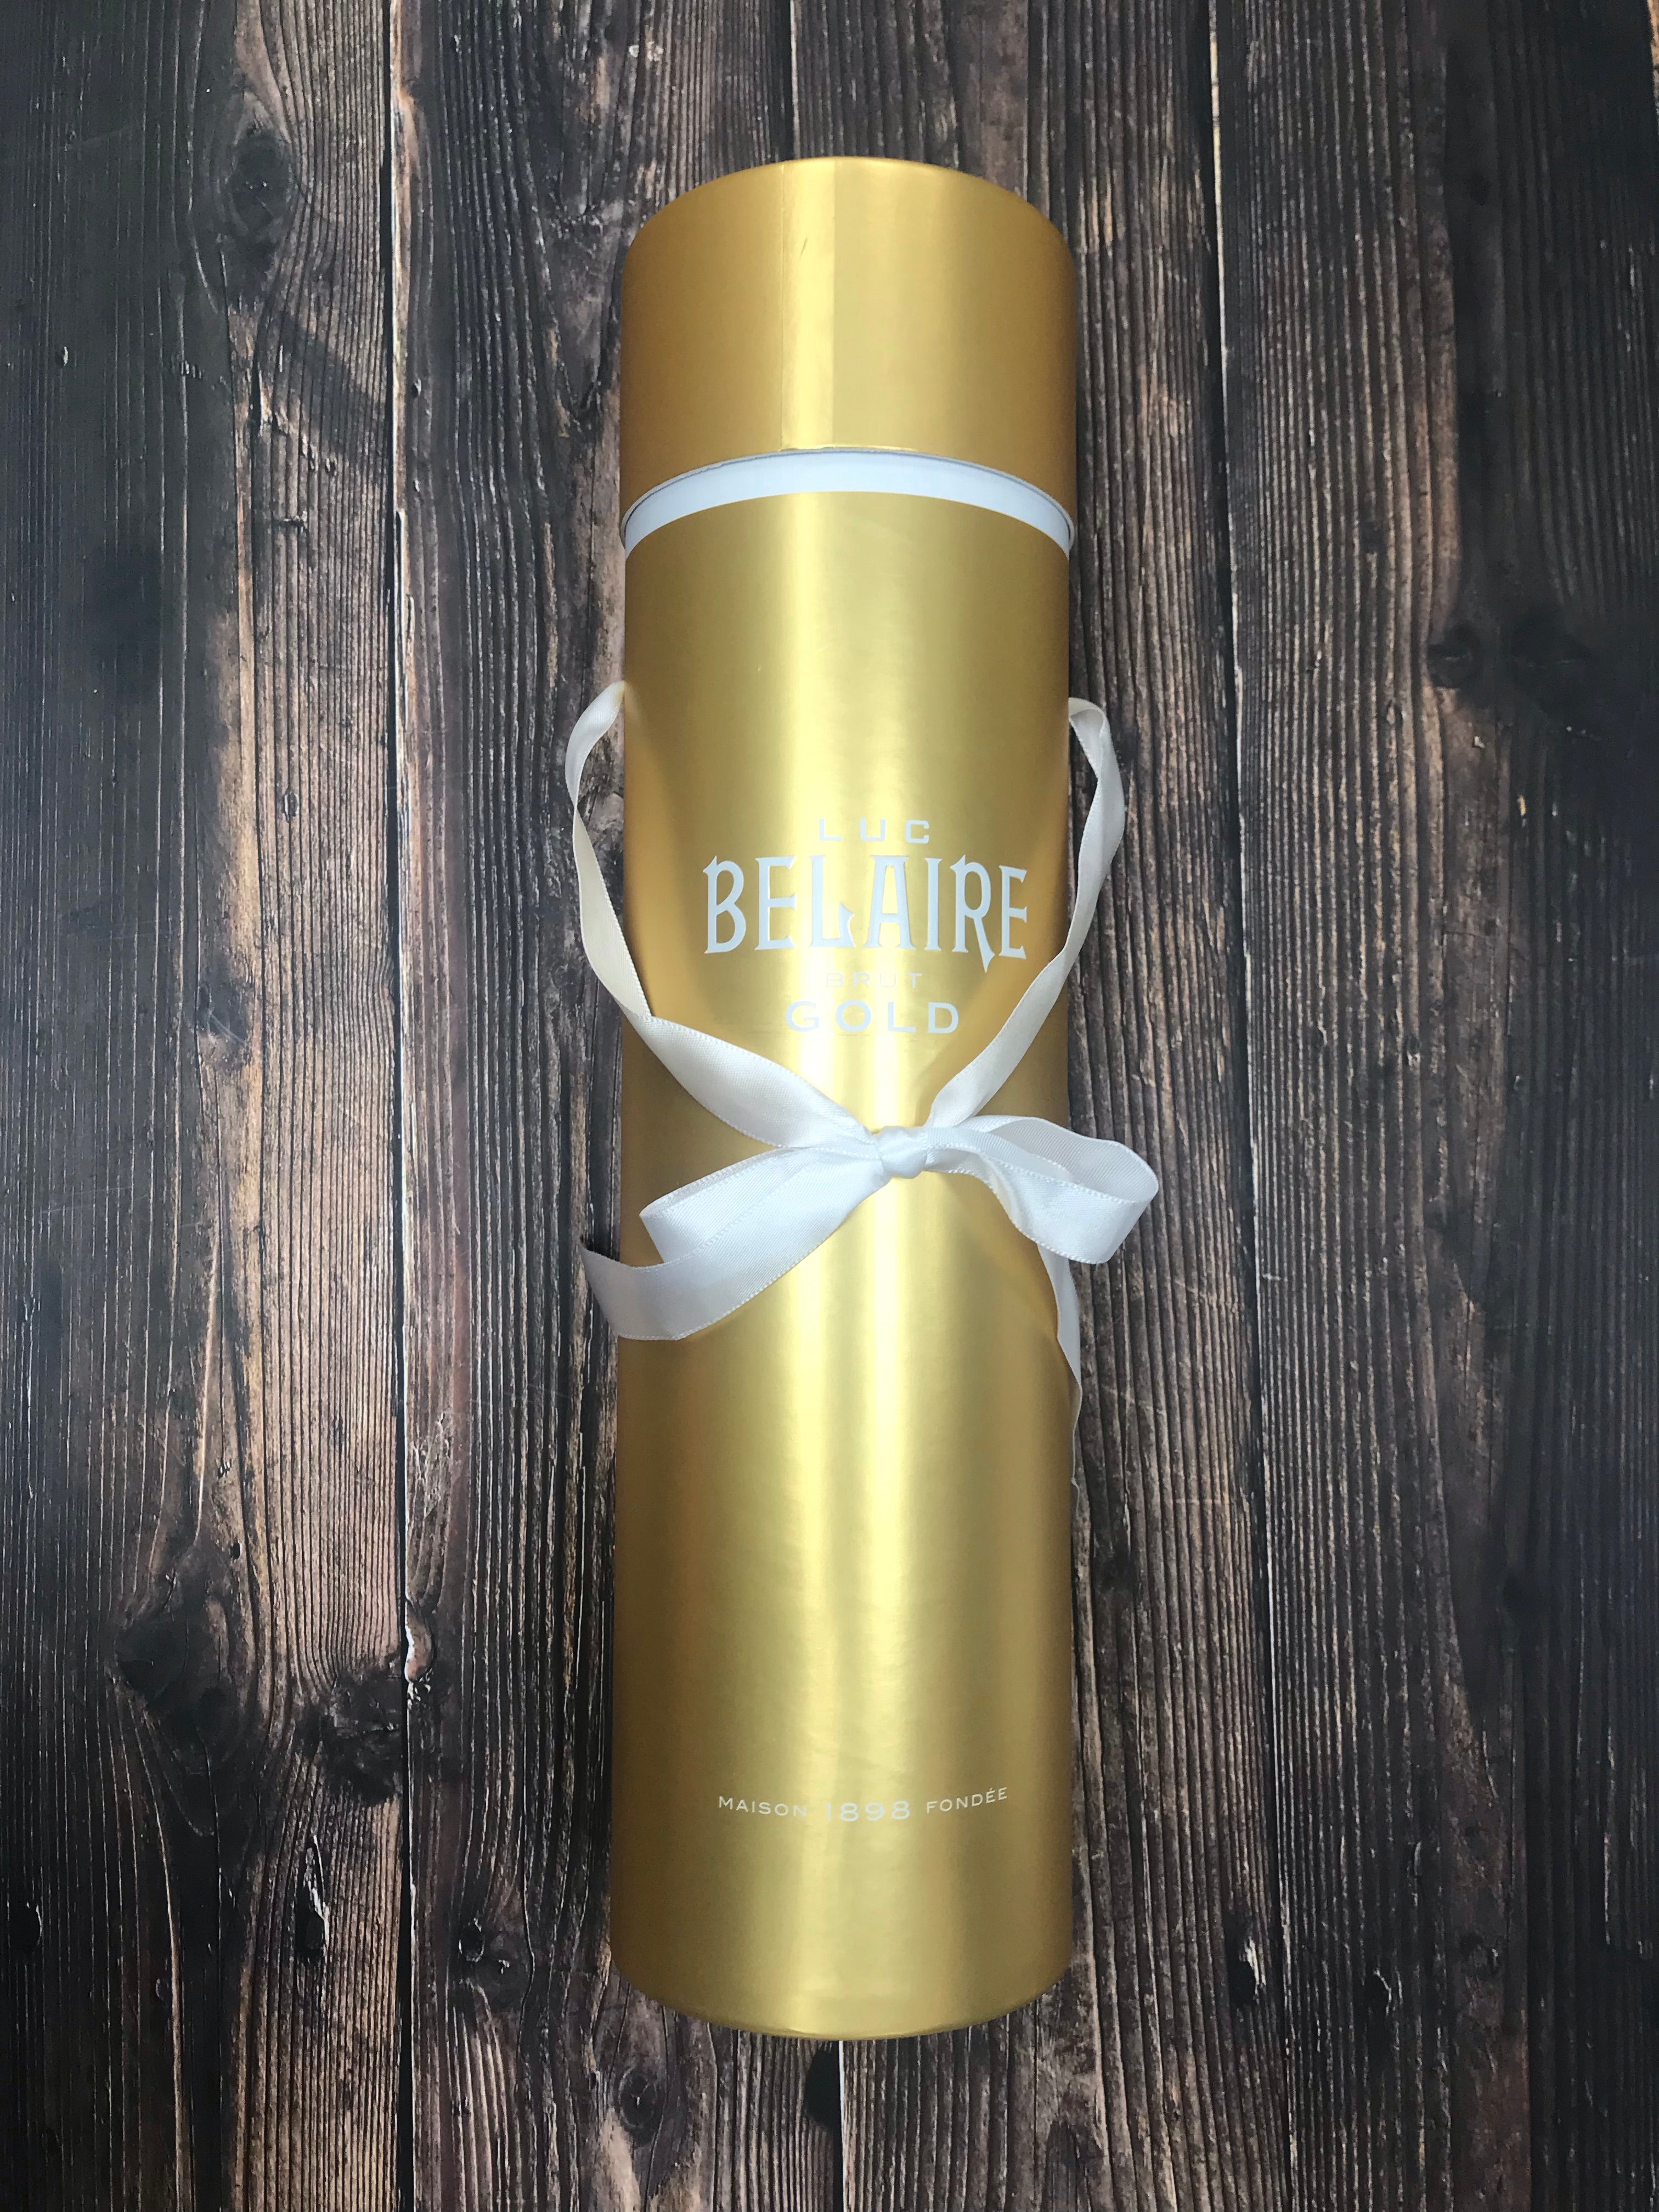 Champagne, Luc Belaire Brut Gold – VinoVin Wine and Spirits